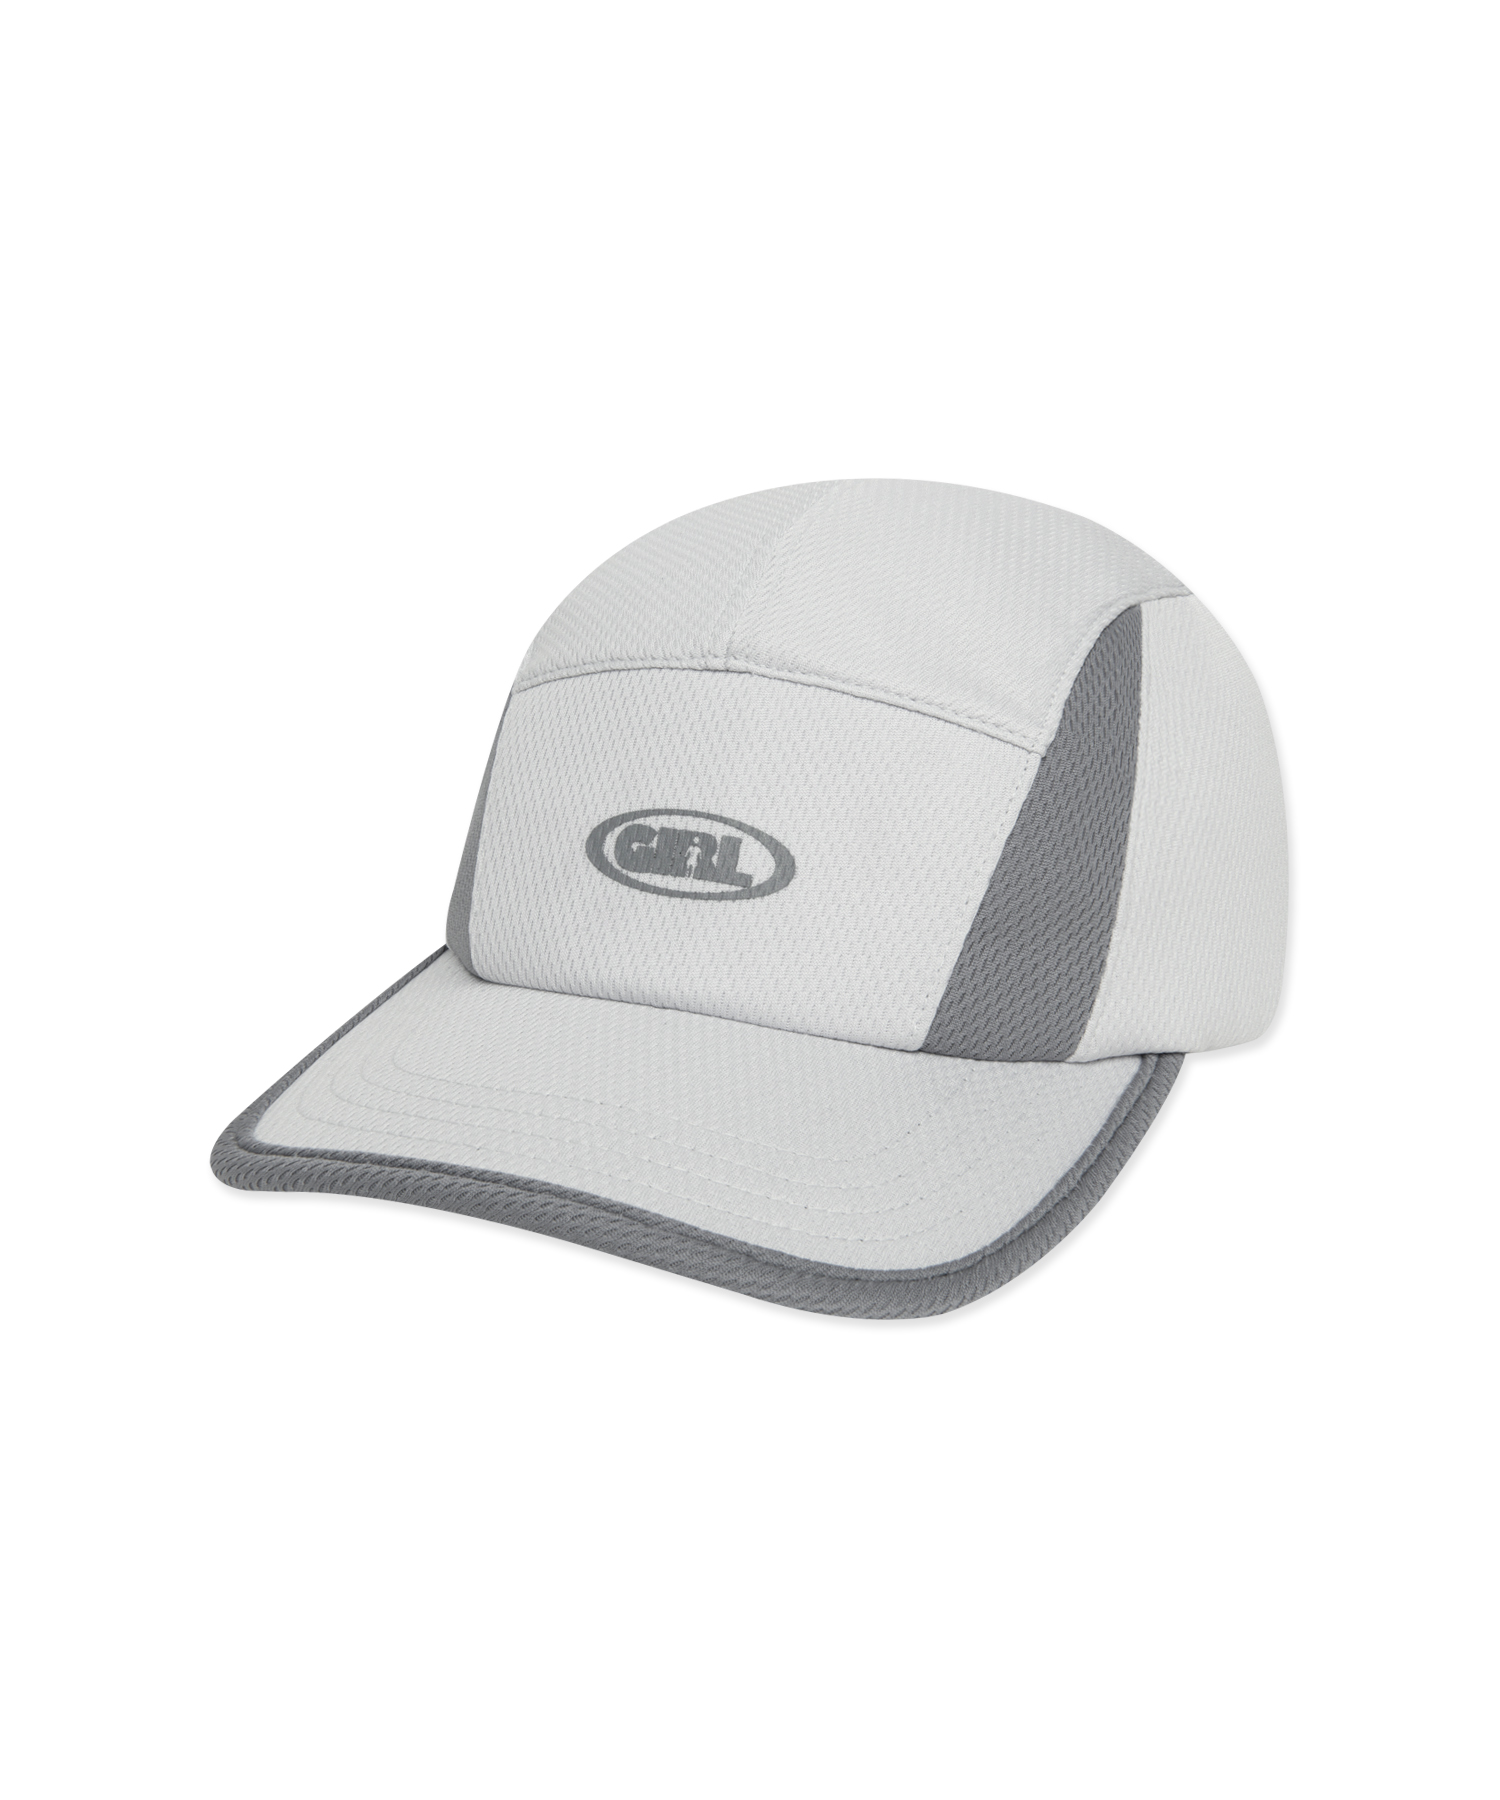 OVAL ADVERTYPE MESH CAMP CAP gray